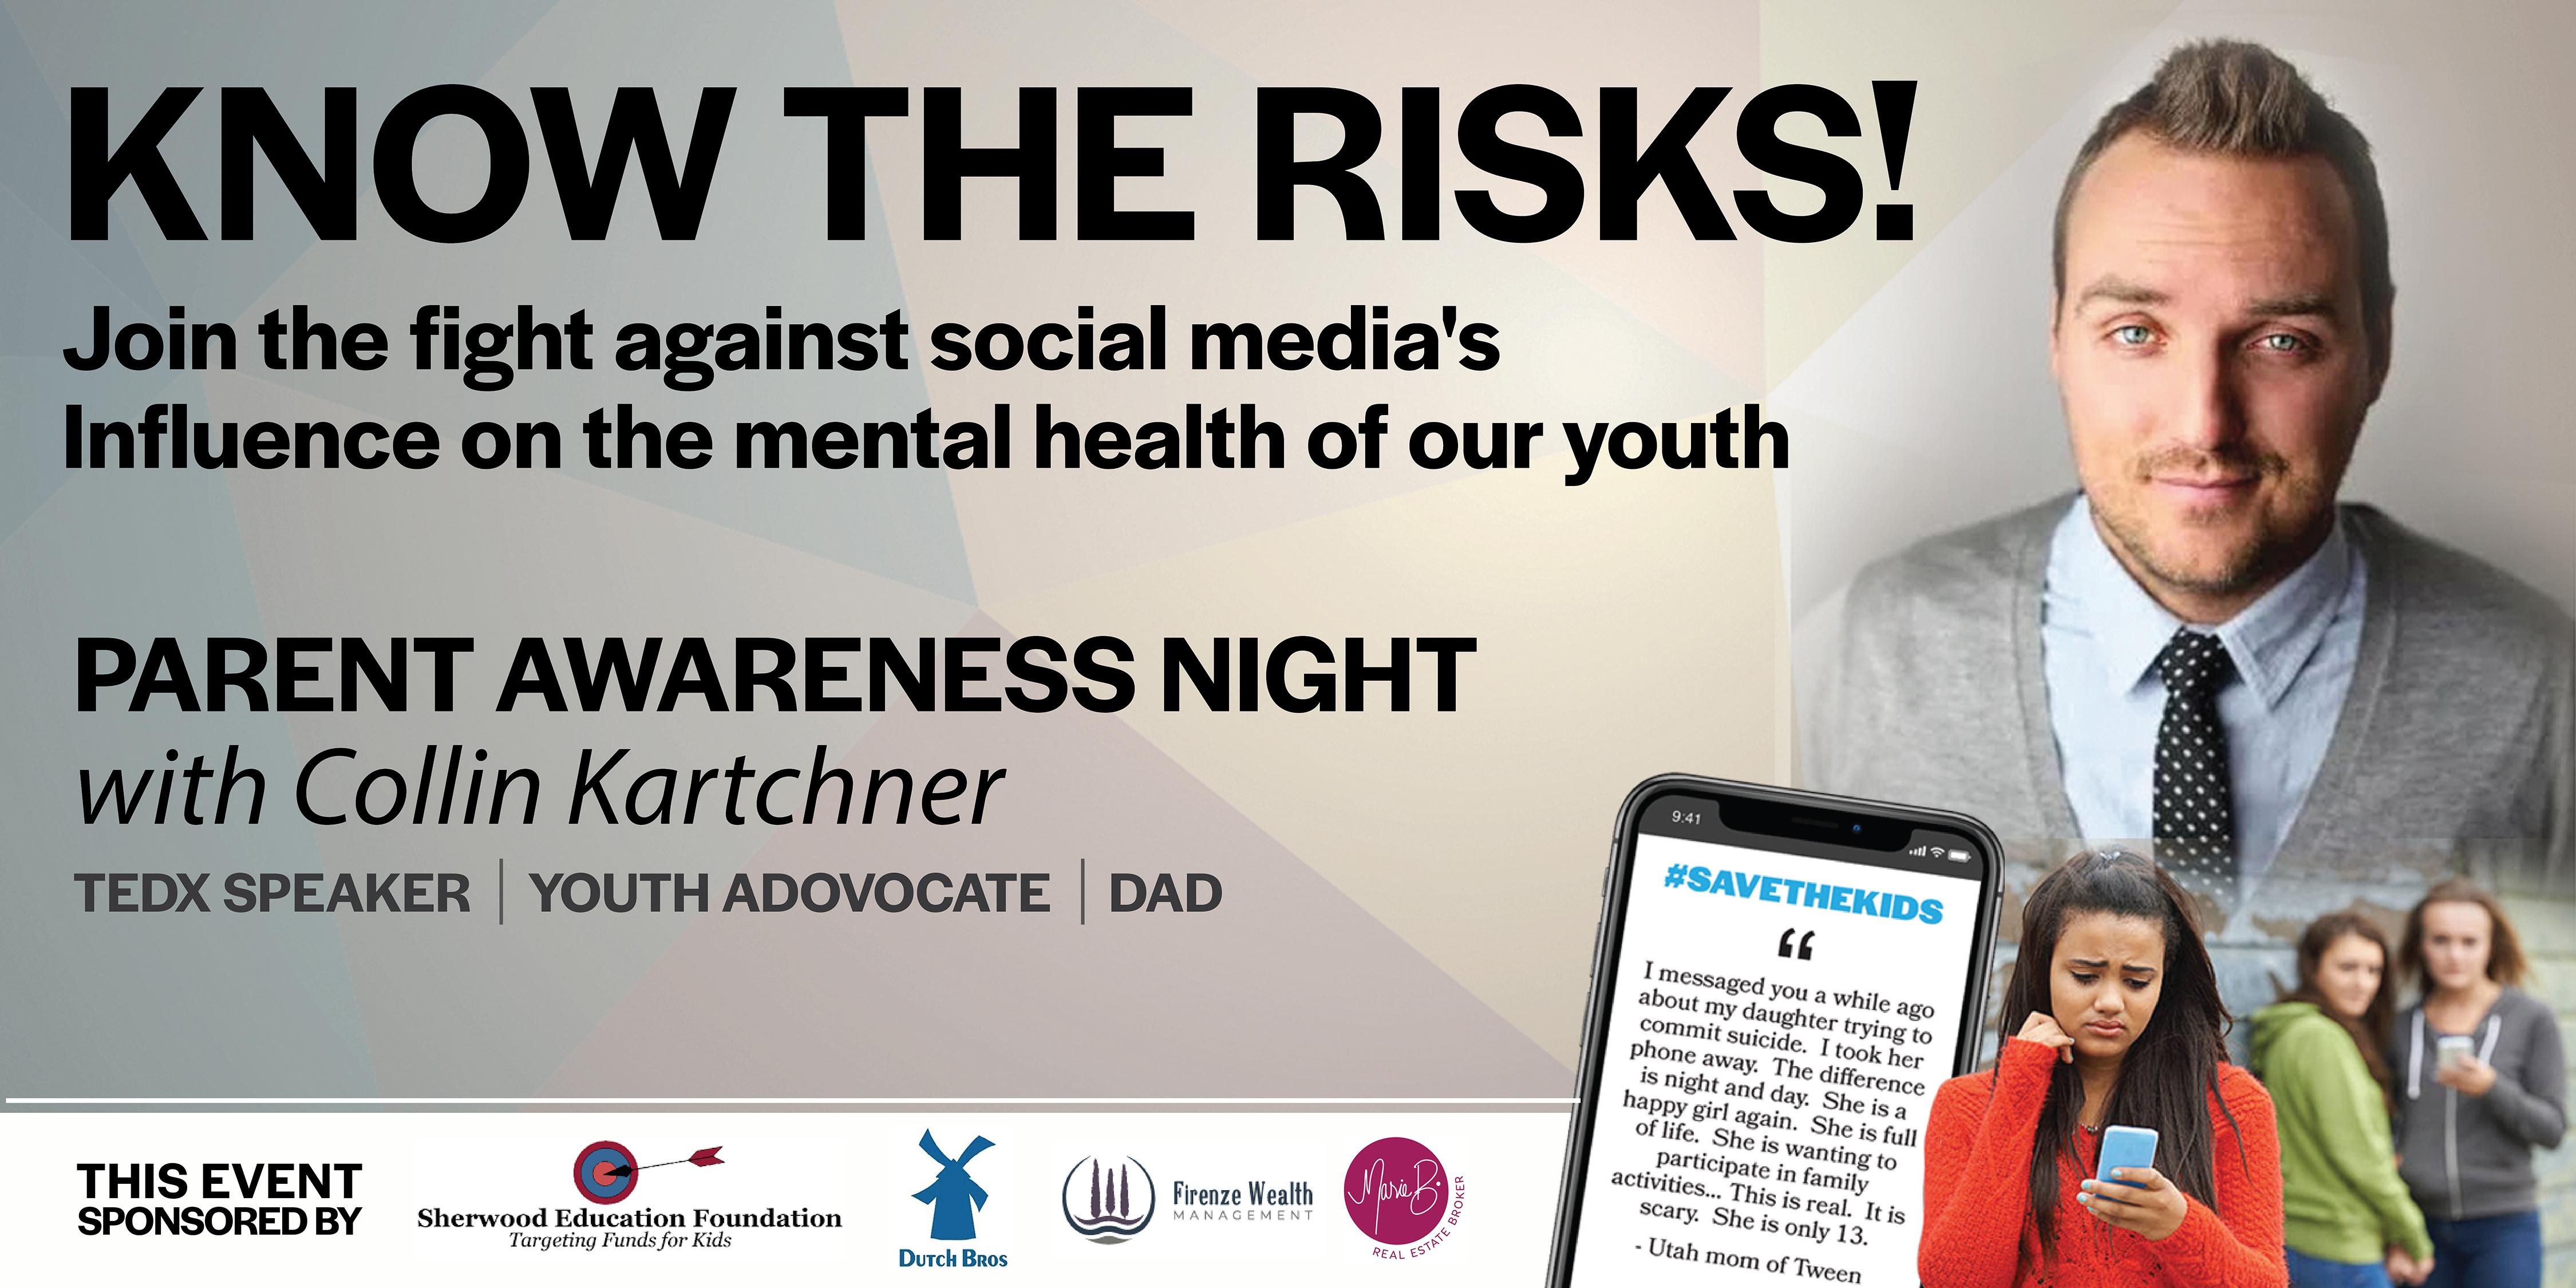 Parent Awareness Night with Collin Kartchner ~ #SavetheKids